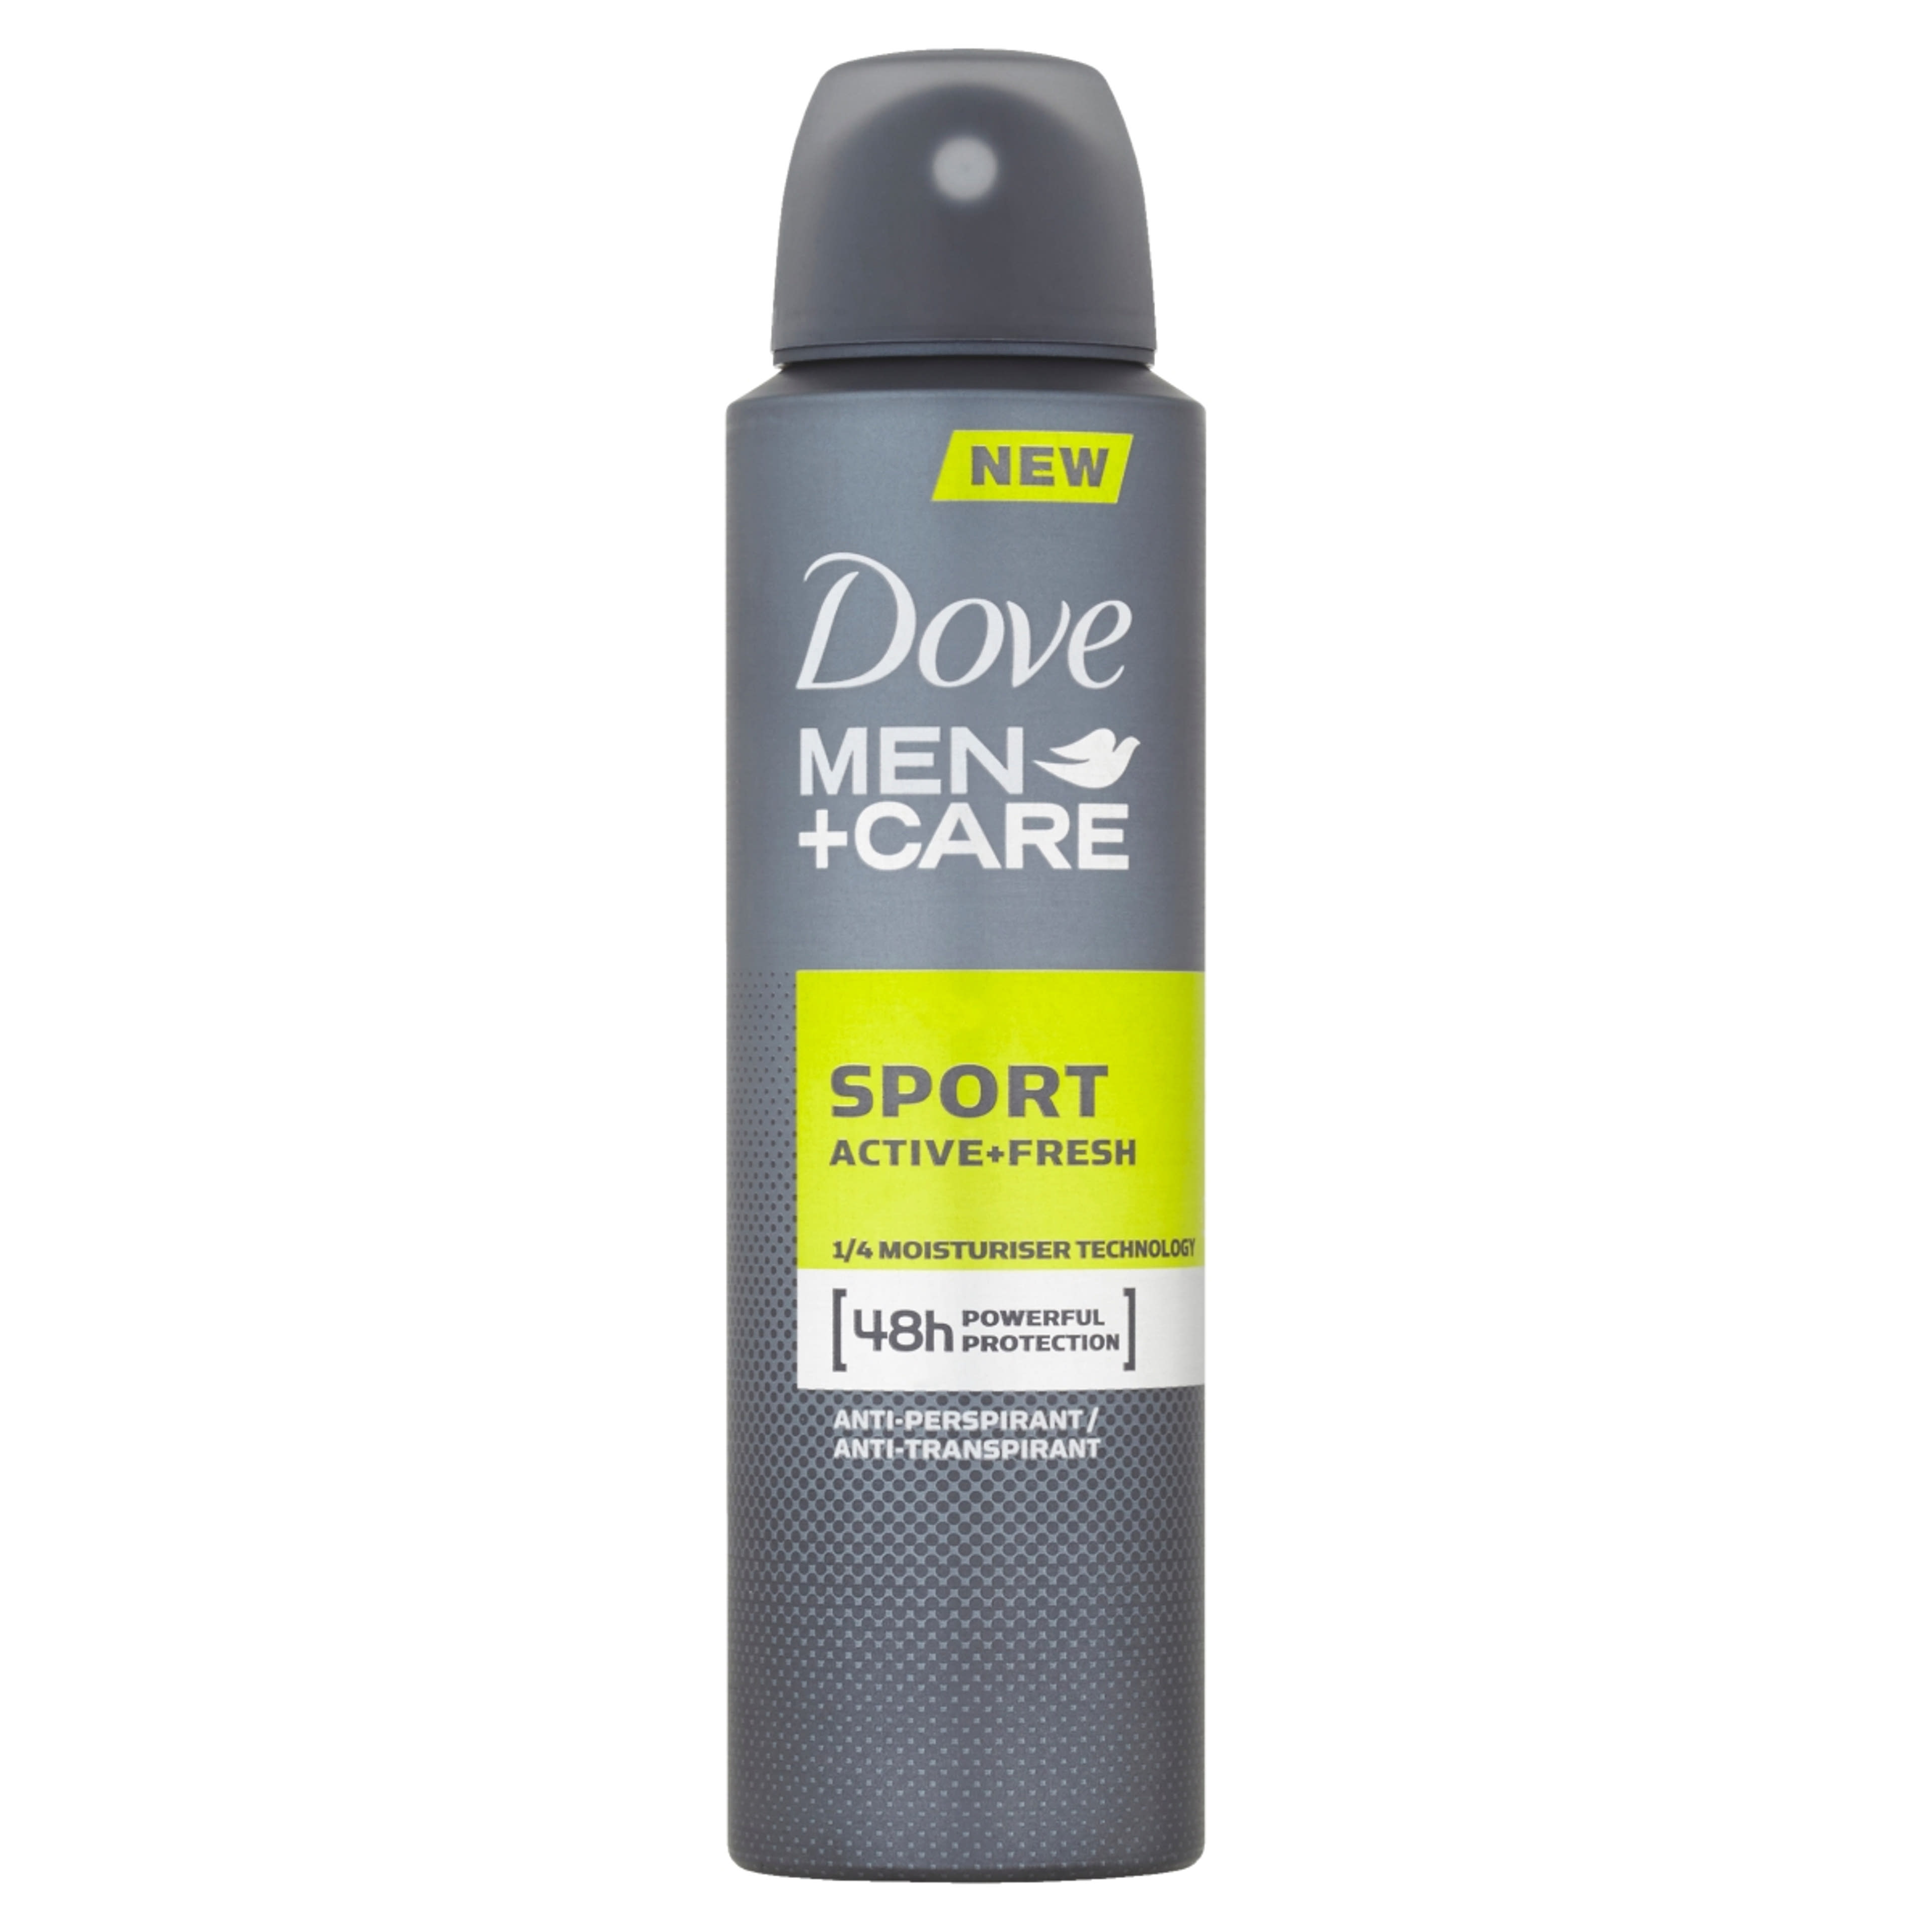 Dove deo men+care sport active fresh - 150 ml-1